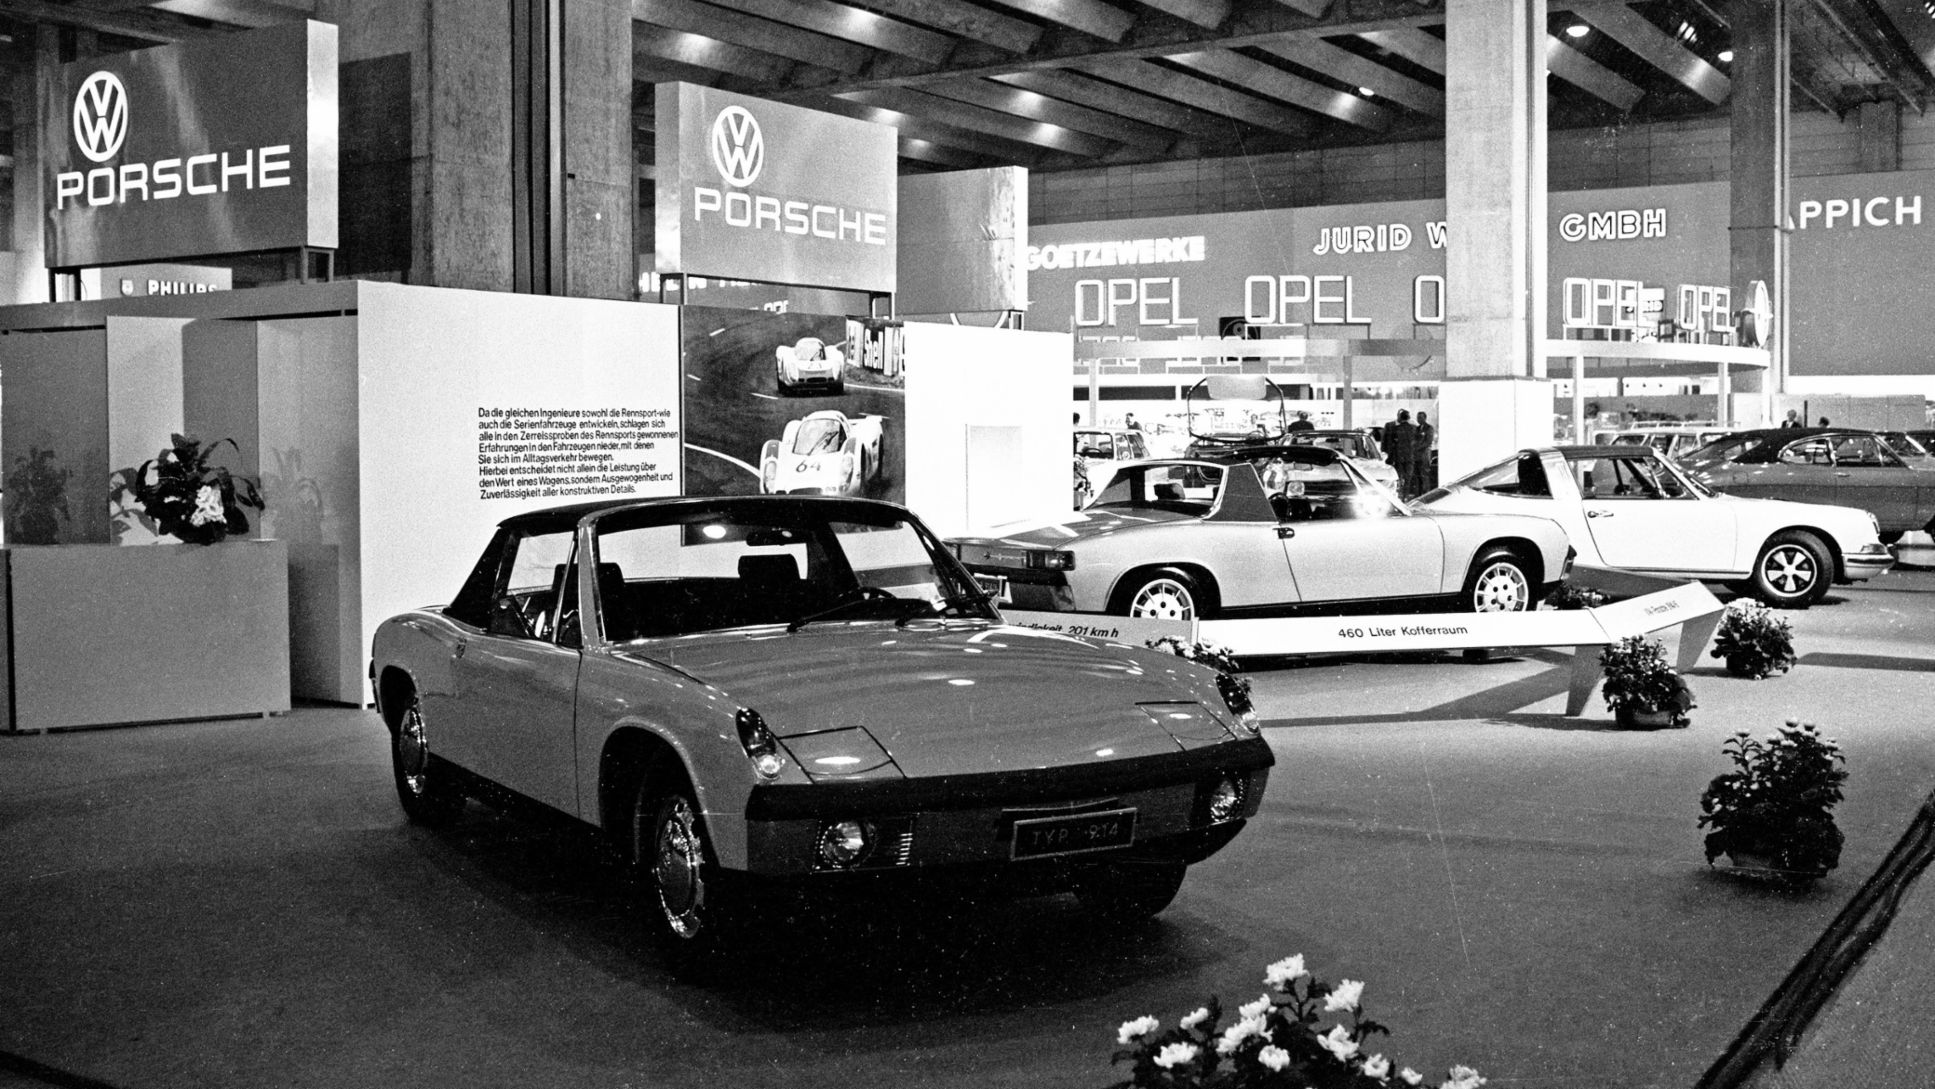 Porsche 914/4, Porsche 914/6, izda.- dcha., Salón International del Automóvil, Fráncfort, 1969, Porsche AG